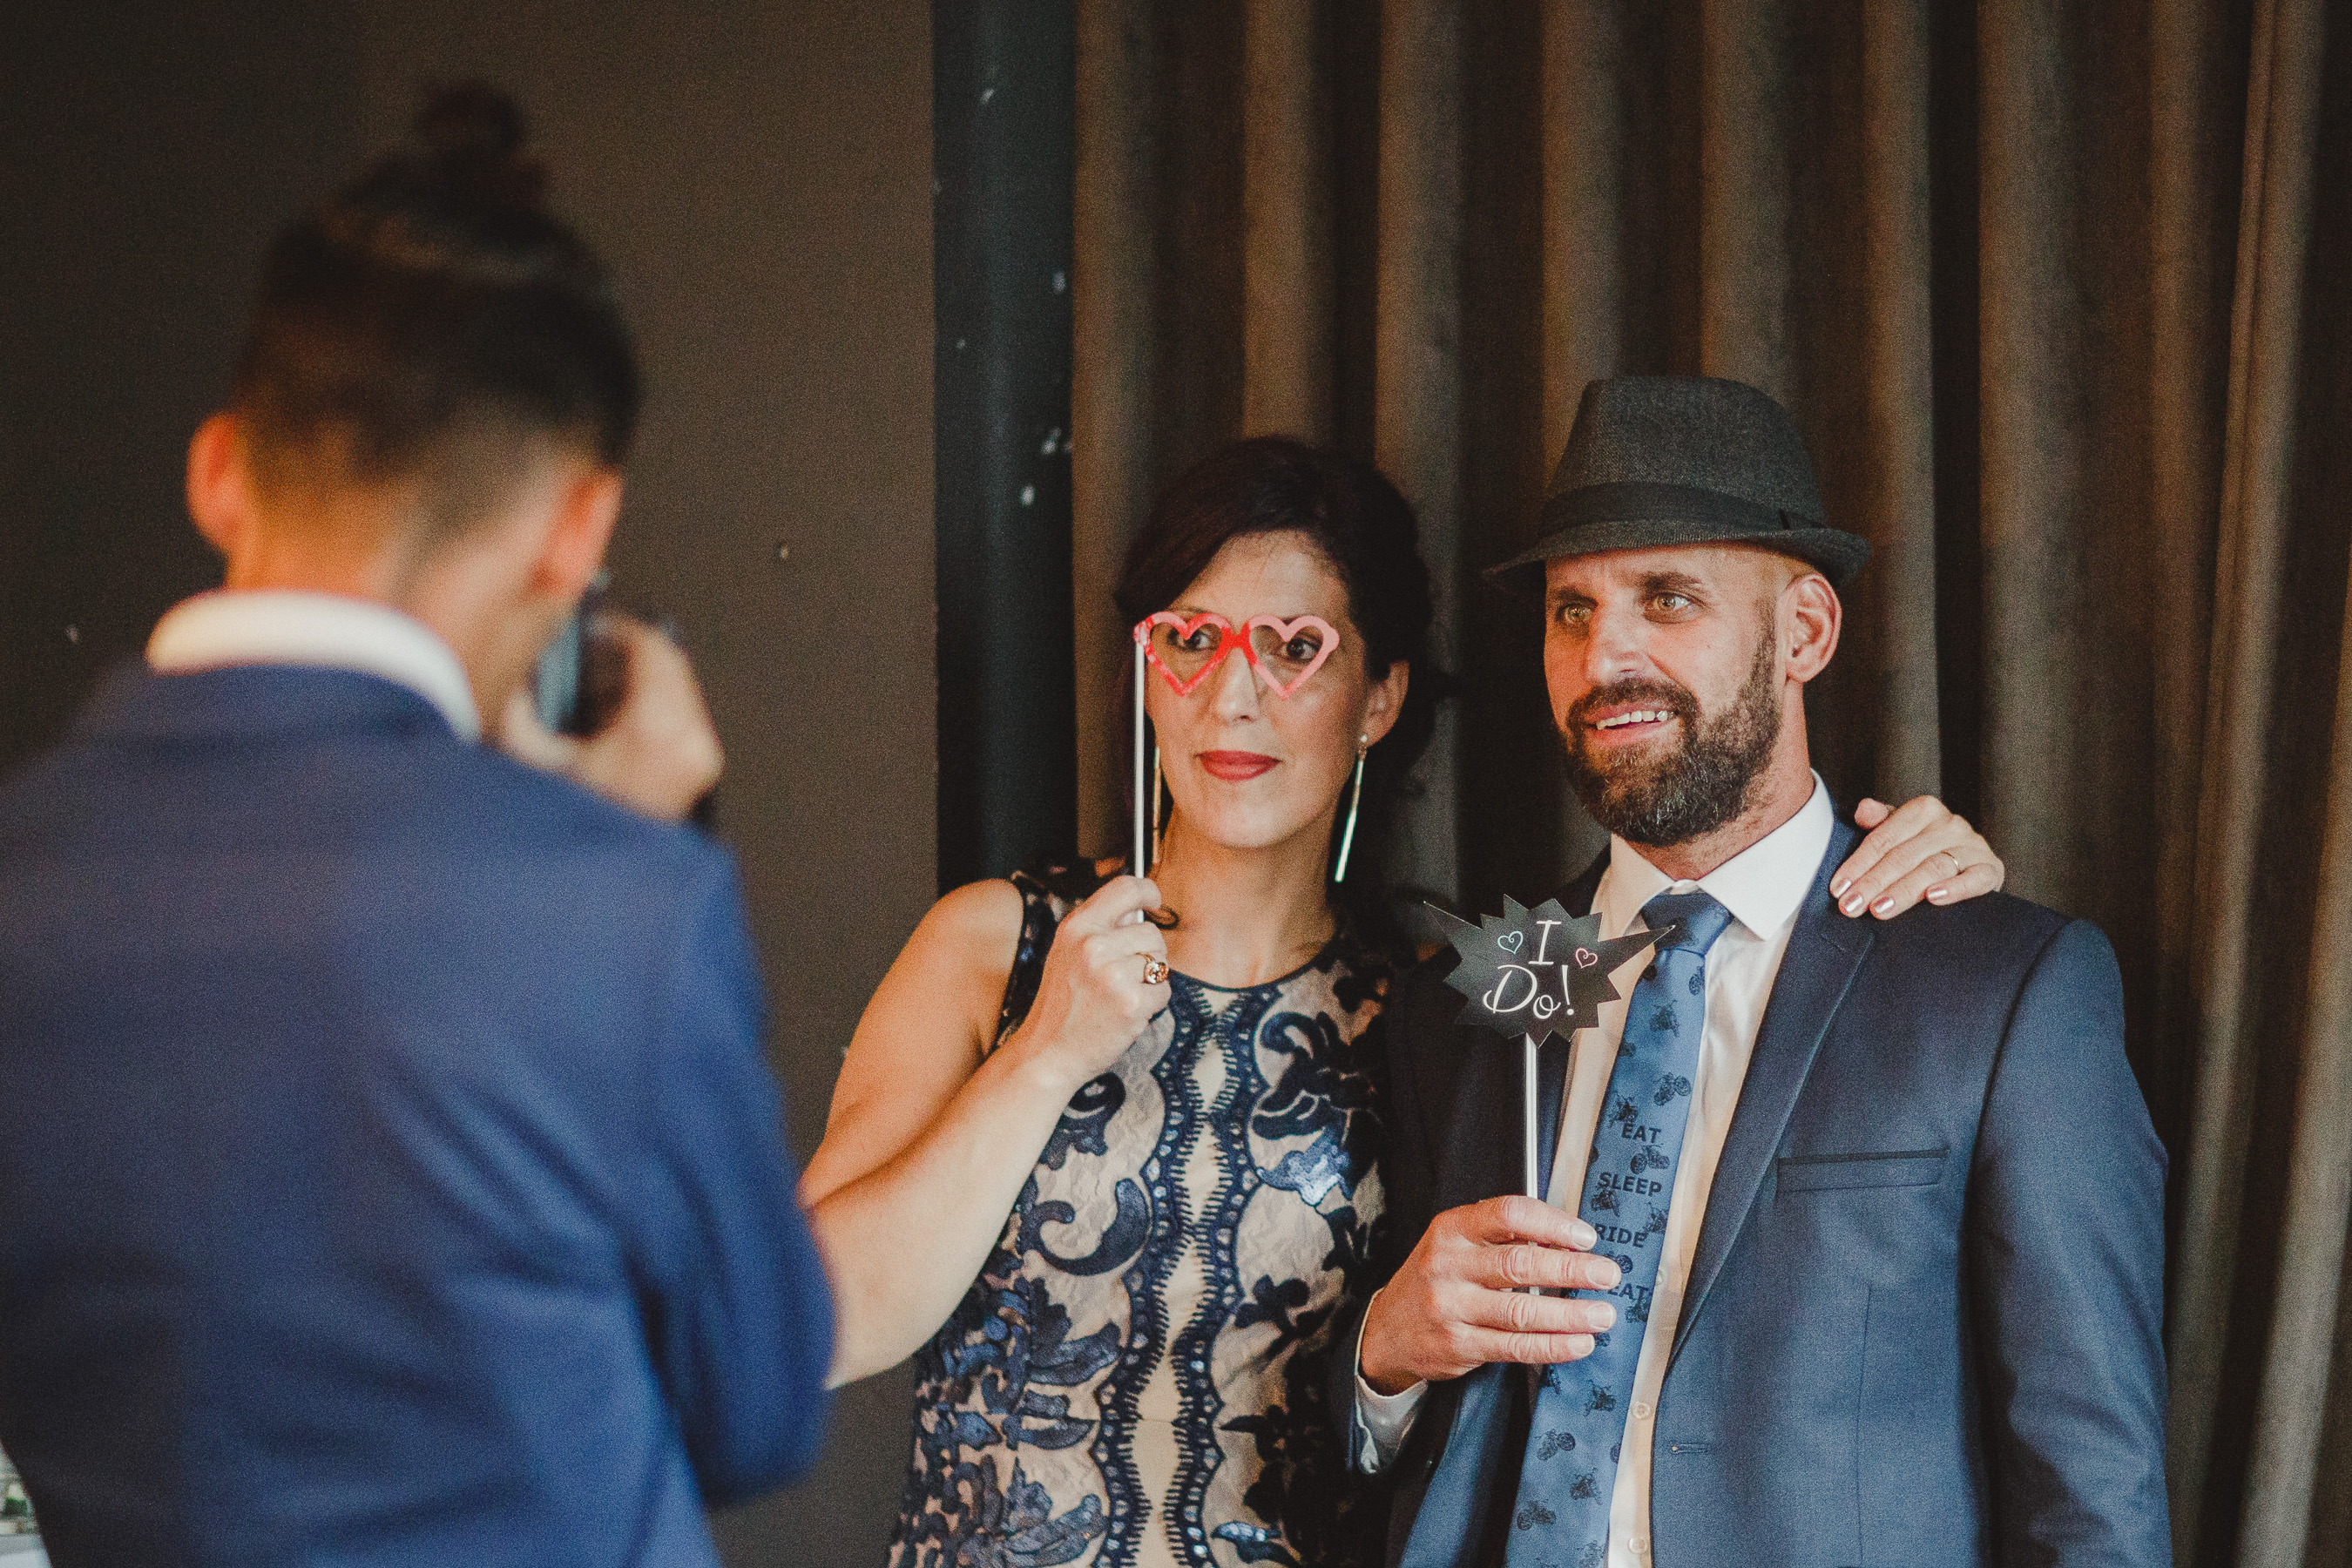 The Spoke Club Wedding Pictures by Toronto Top Wedding Photographer Avangard Photography